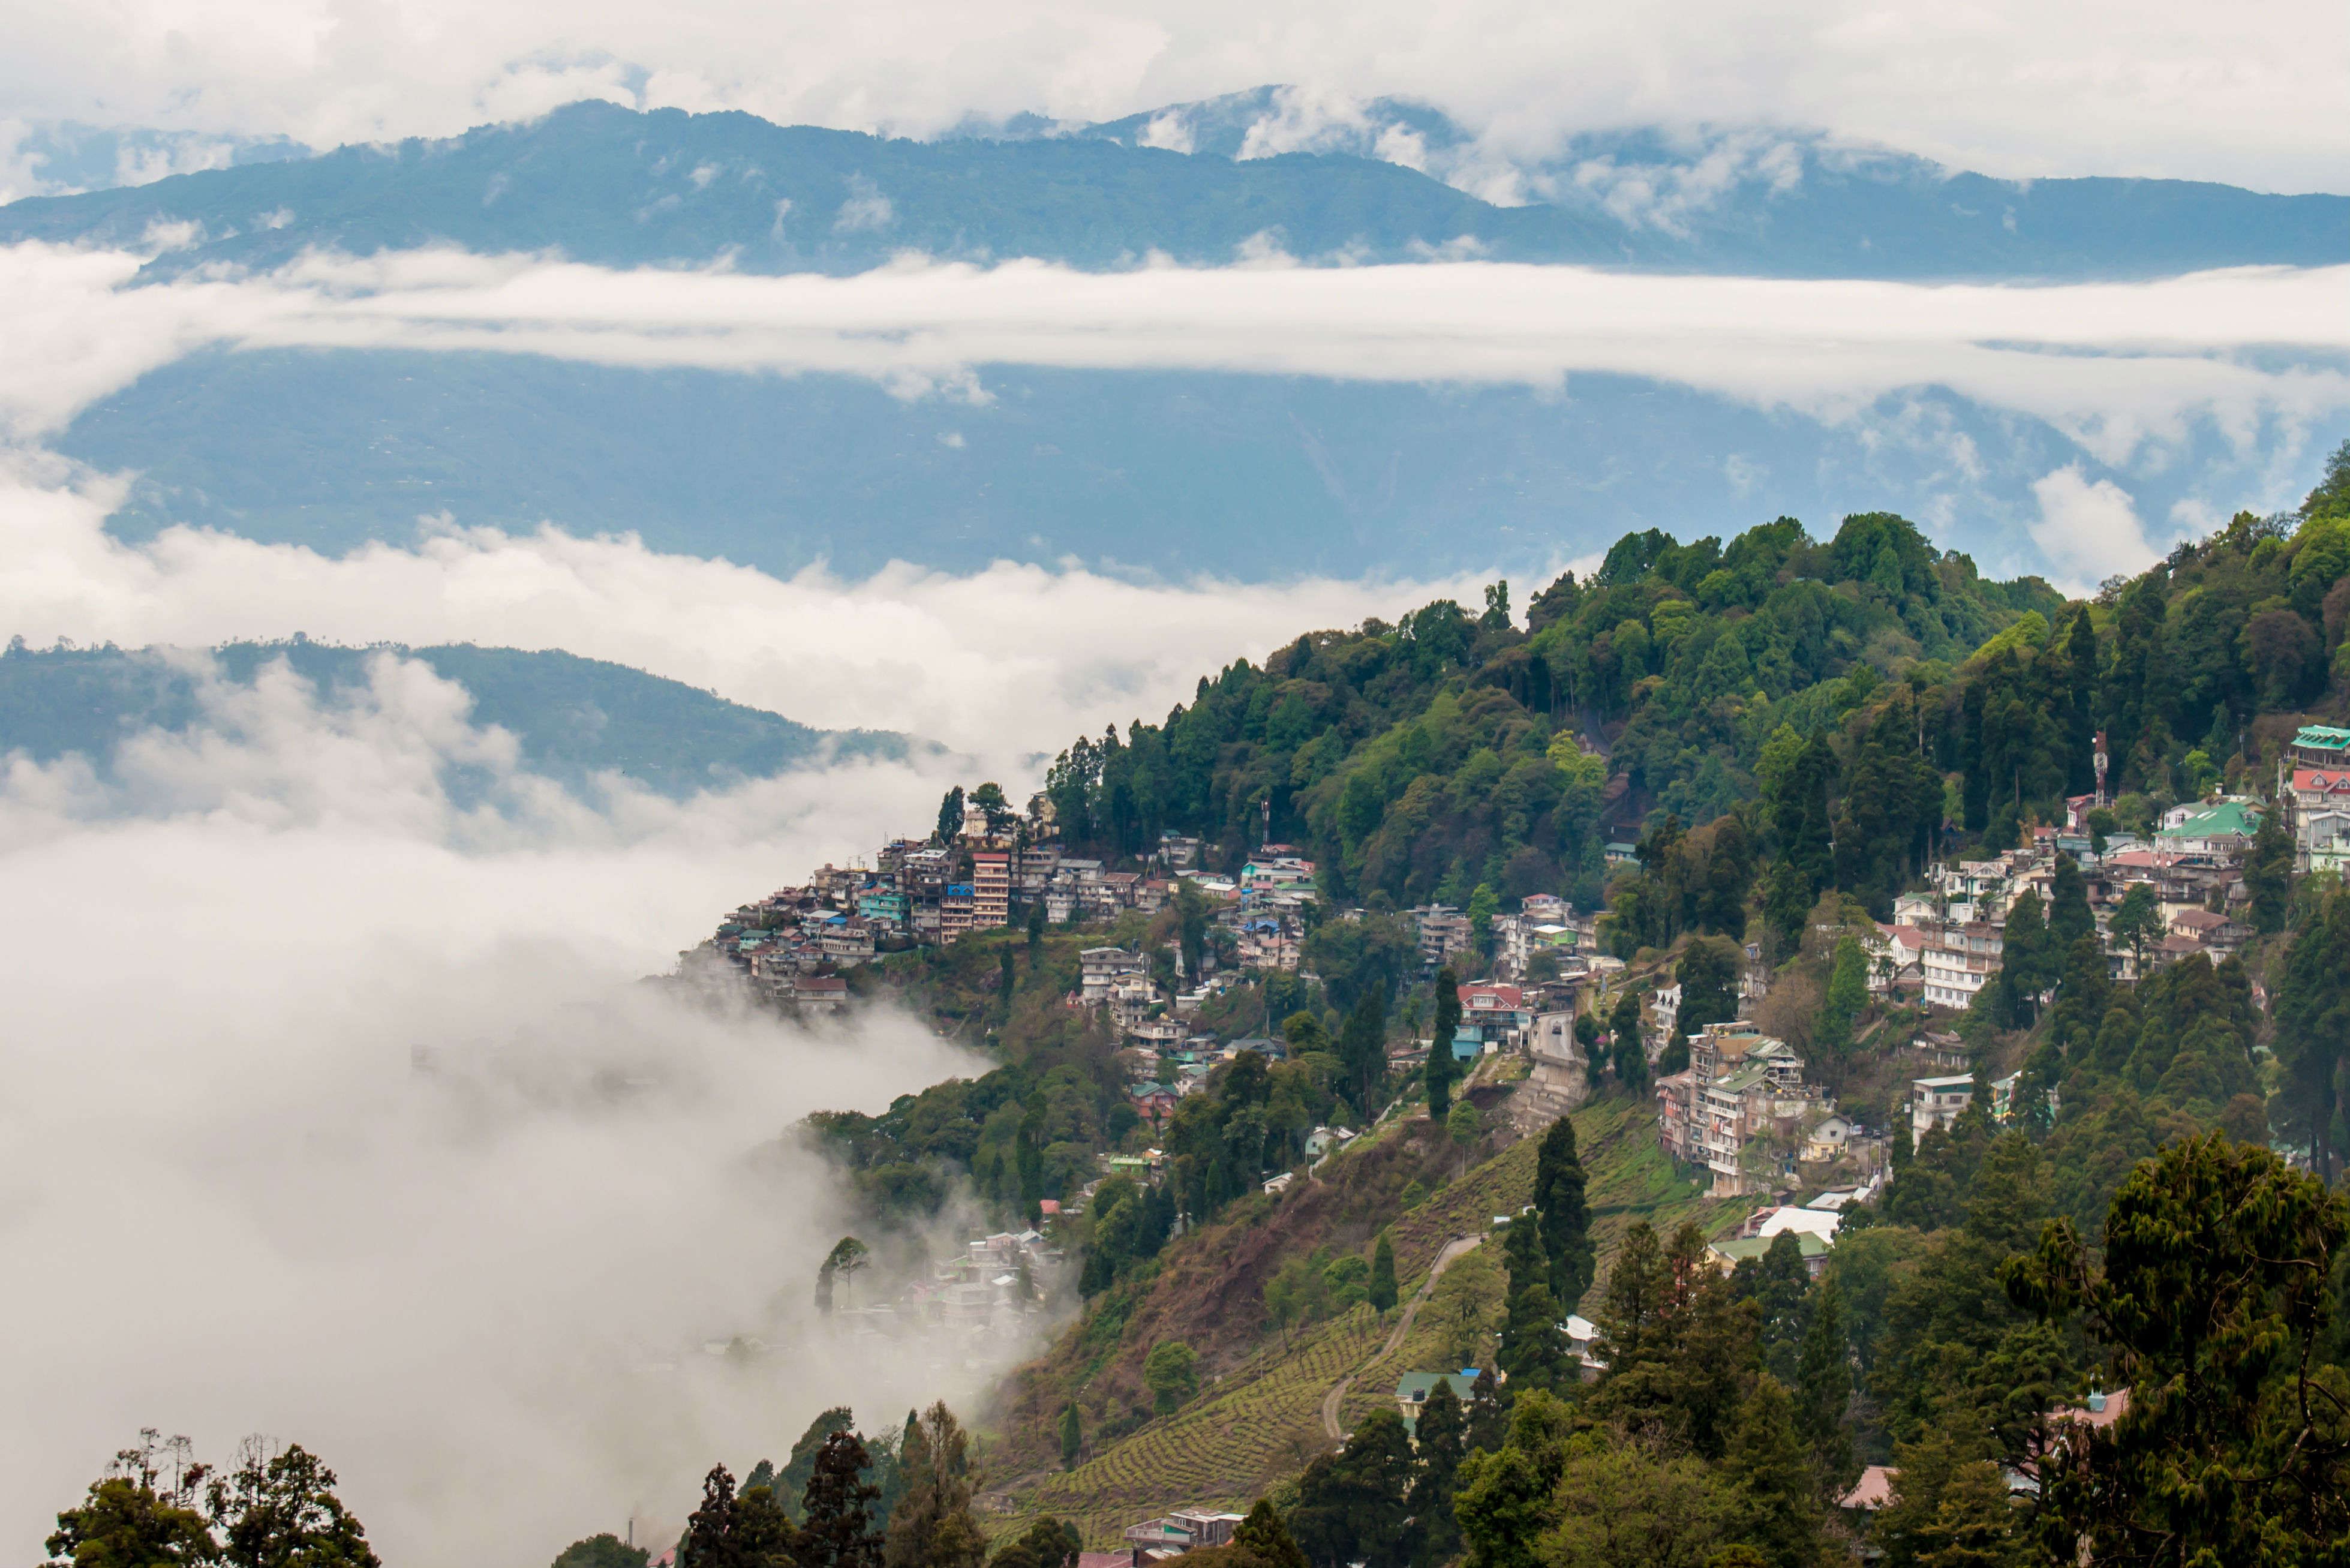 Lifting the fog – going to Darjeeling to see Mount Kanchenjunga